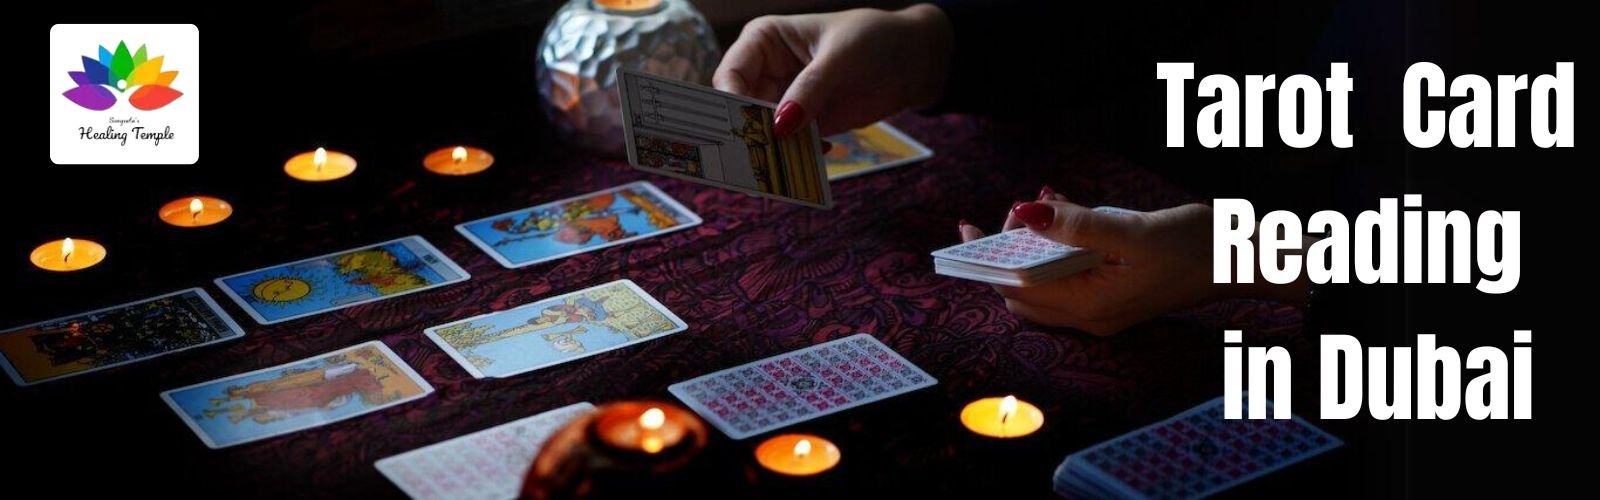 tarot card readers in dubai